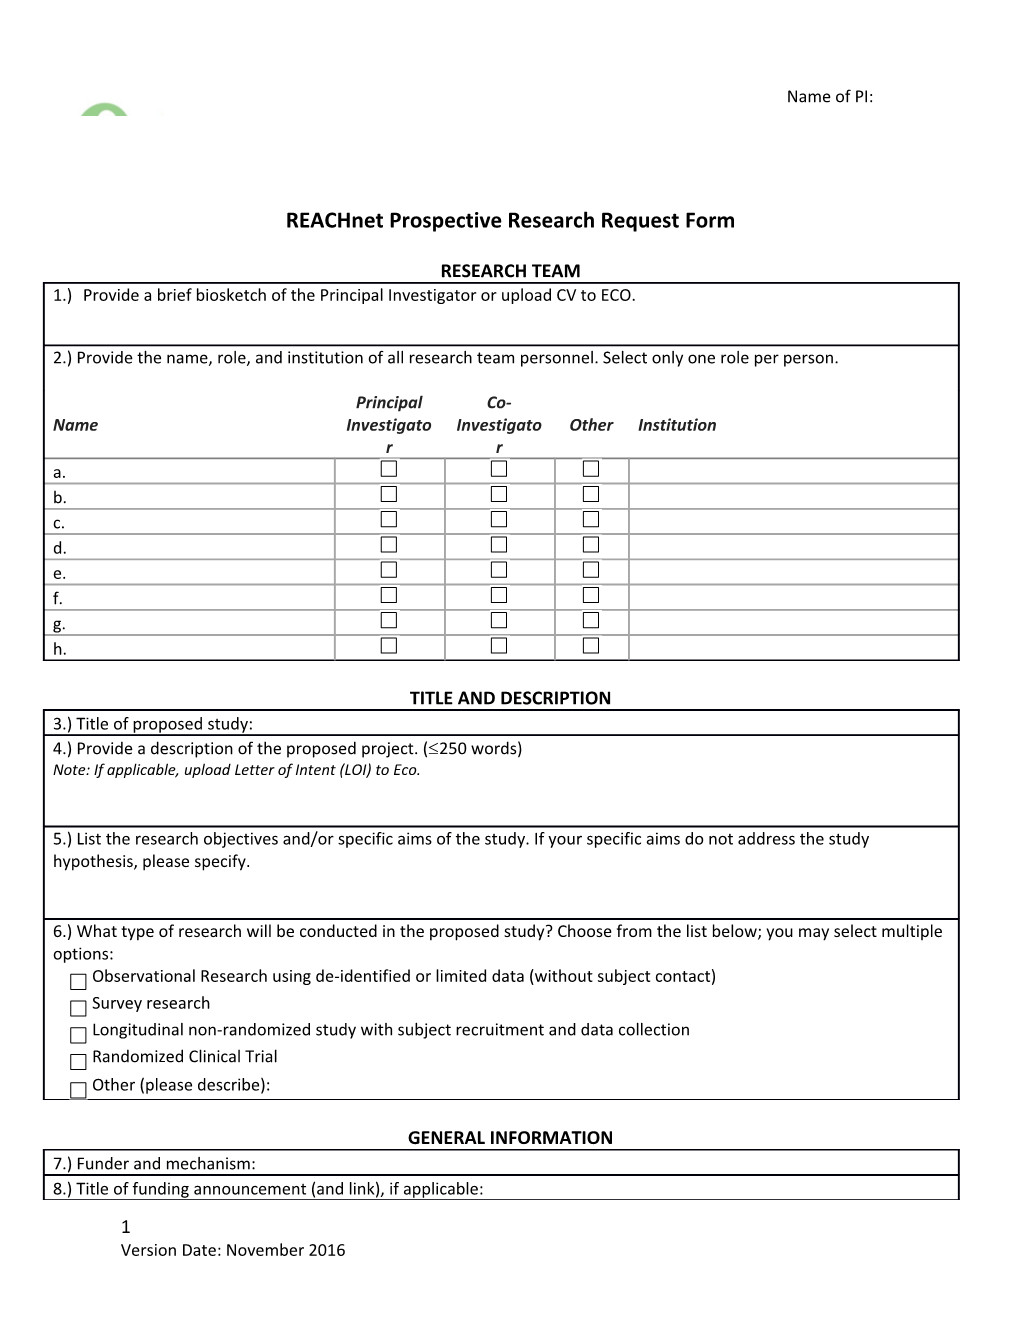 Reachnet Prospective Research Request Form